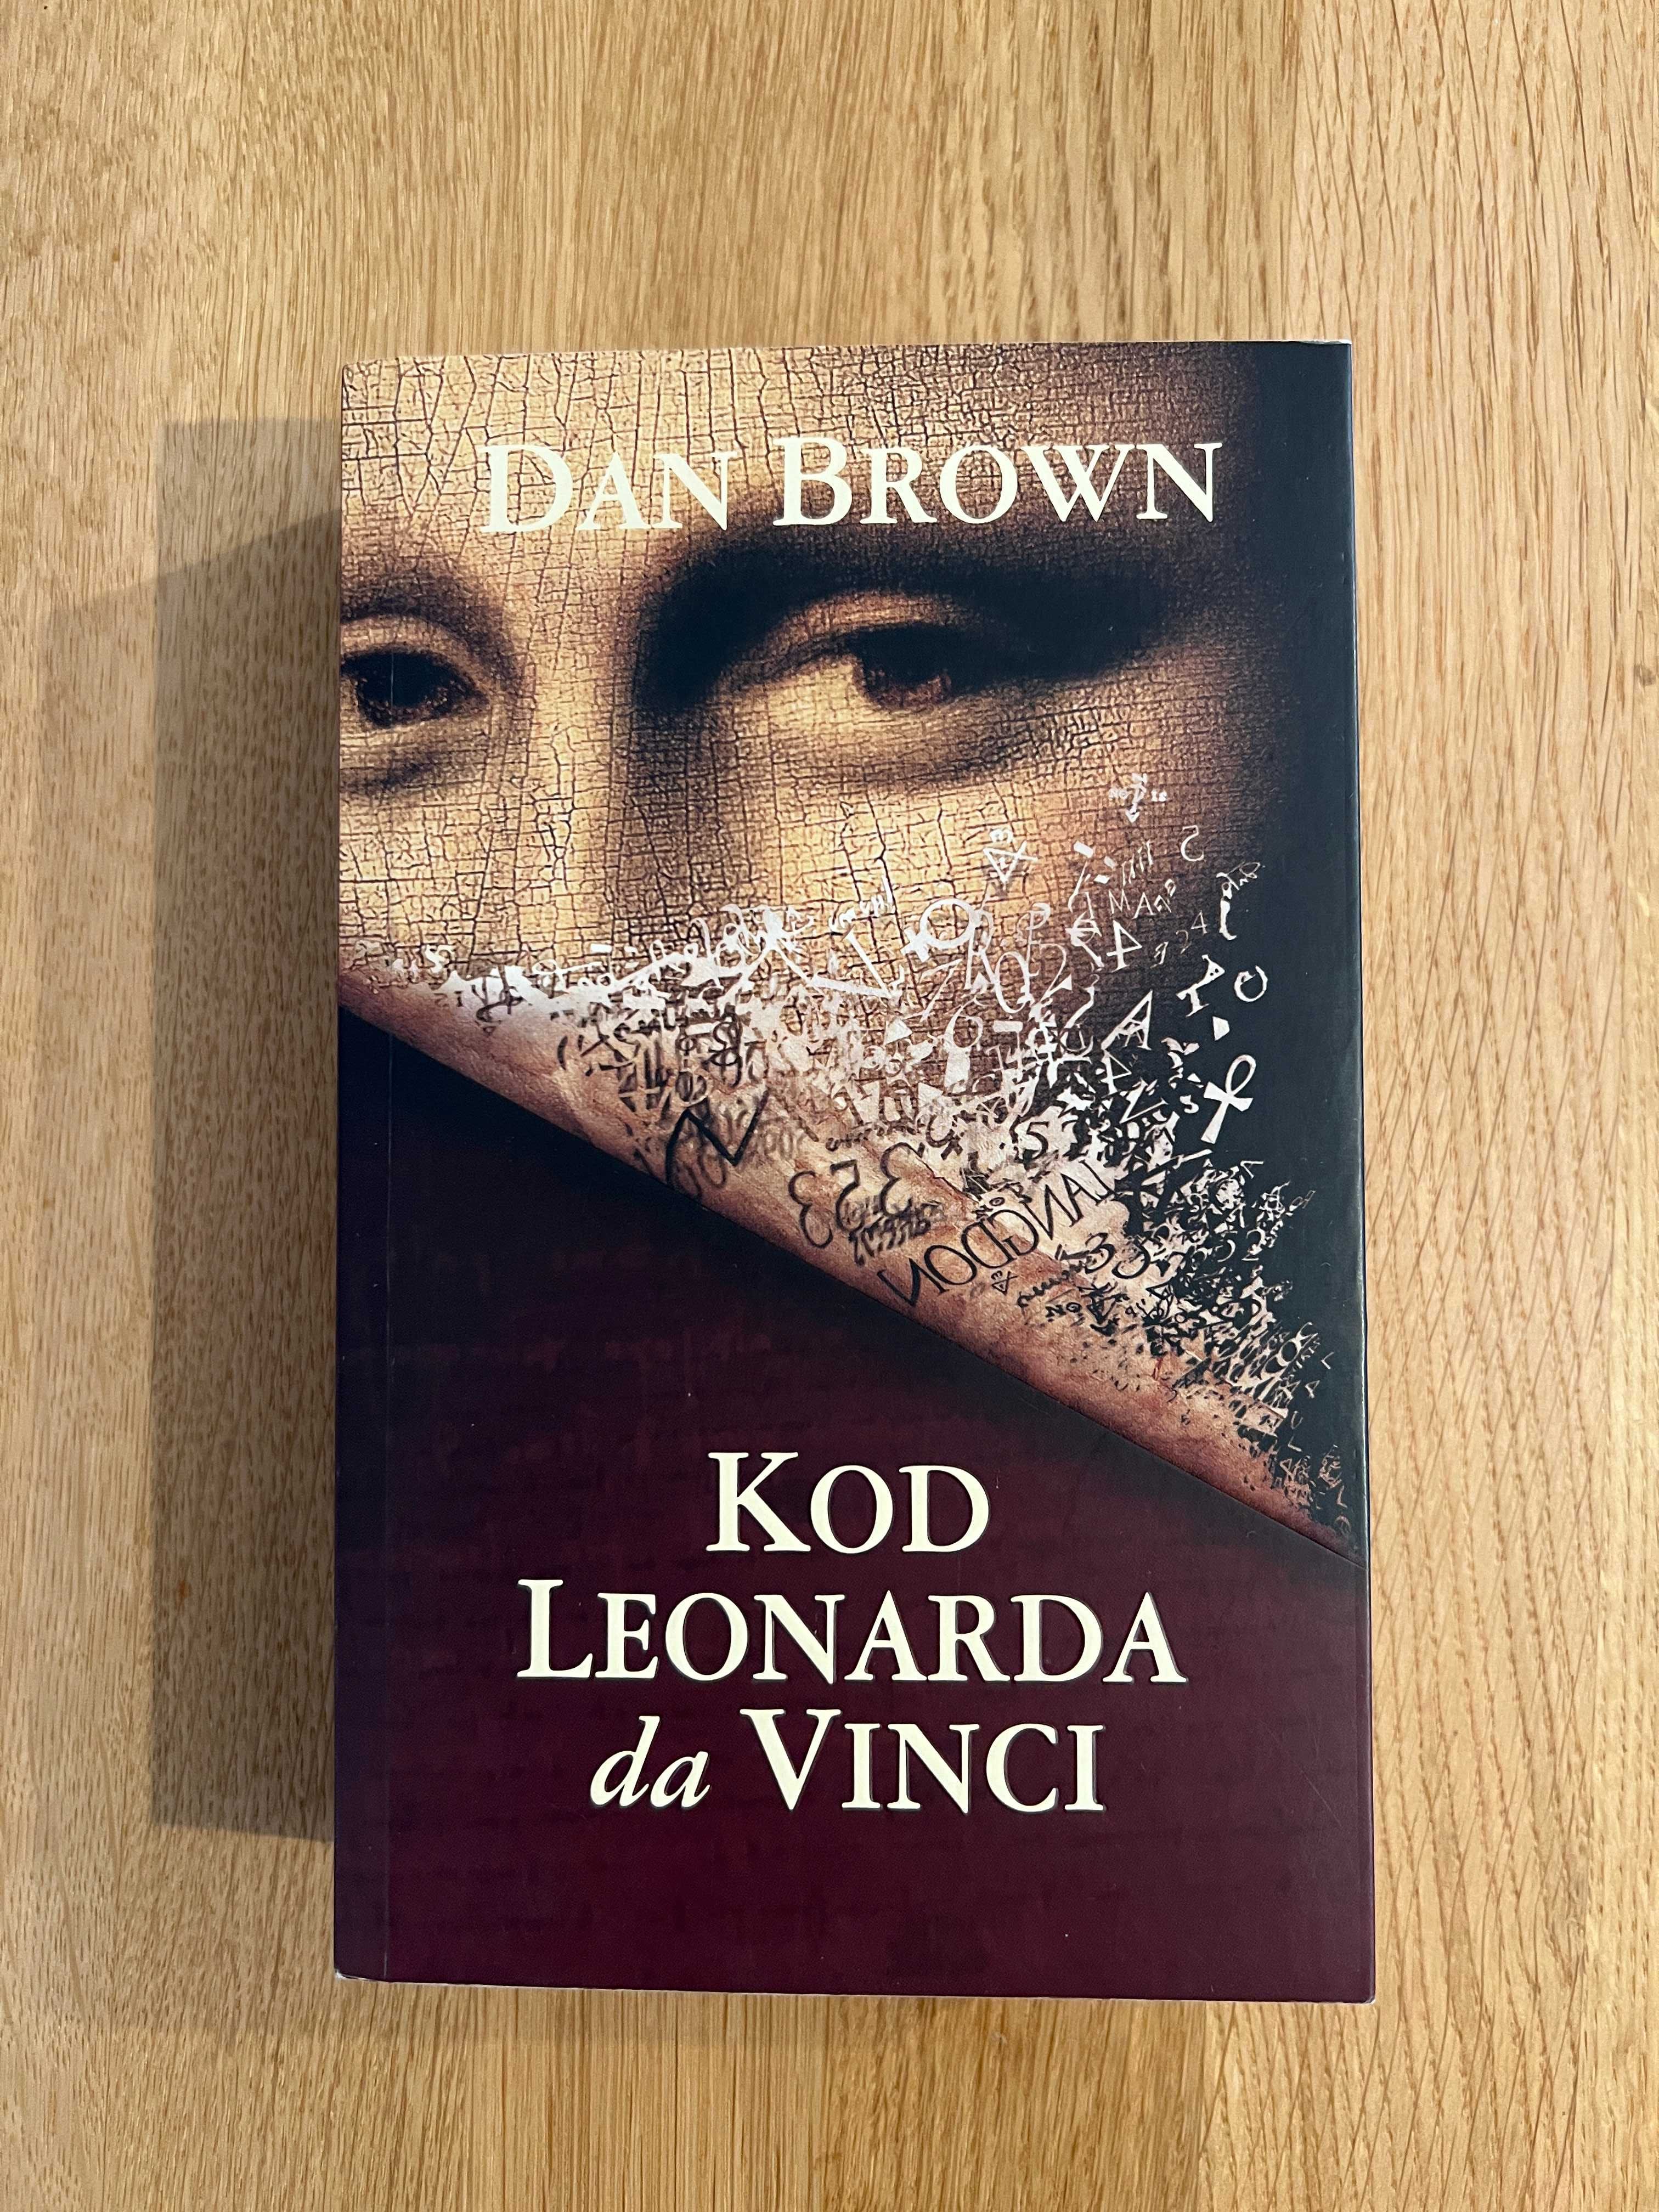 Dan Brown: Anioły i demony, Kod Leonarda da Vinci, Zaginiony symbol